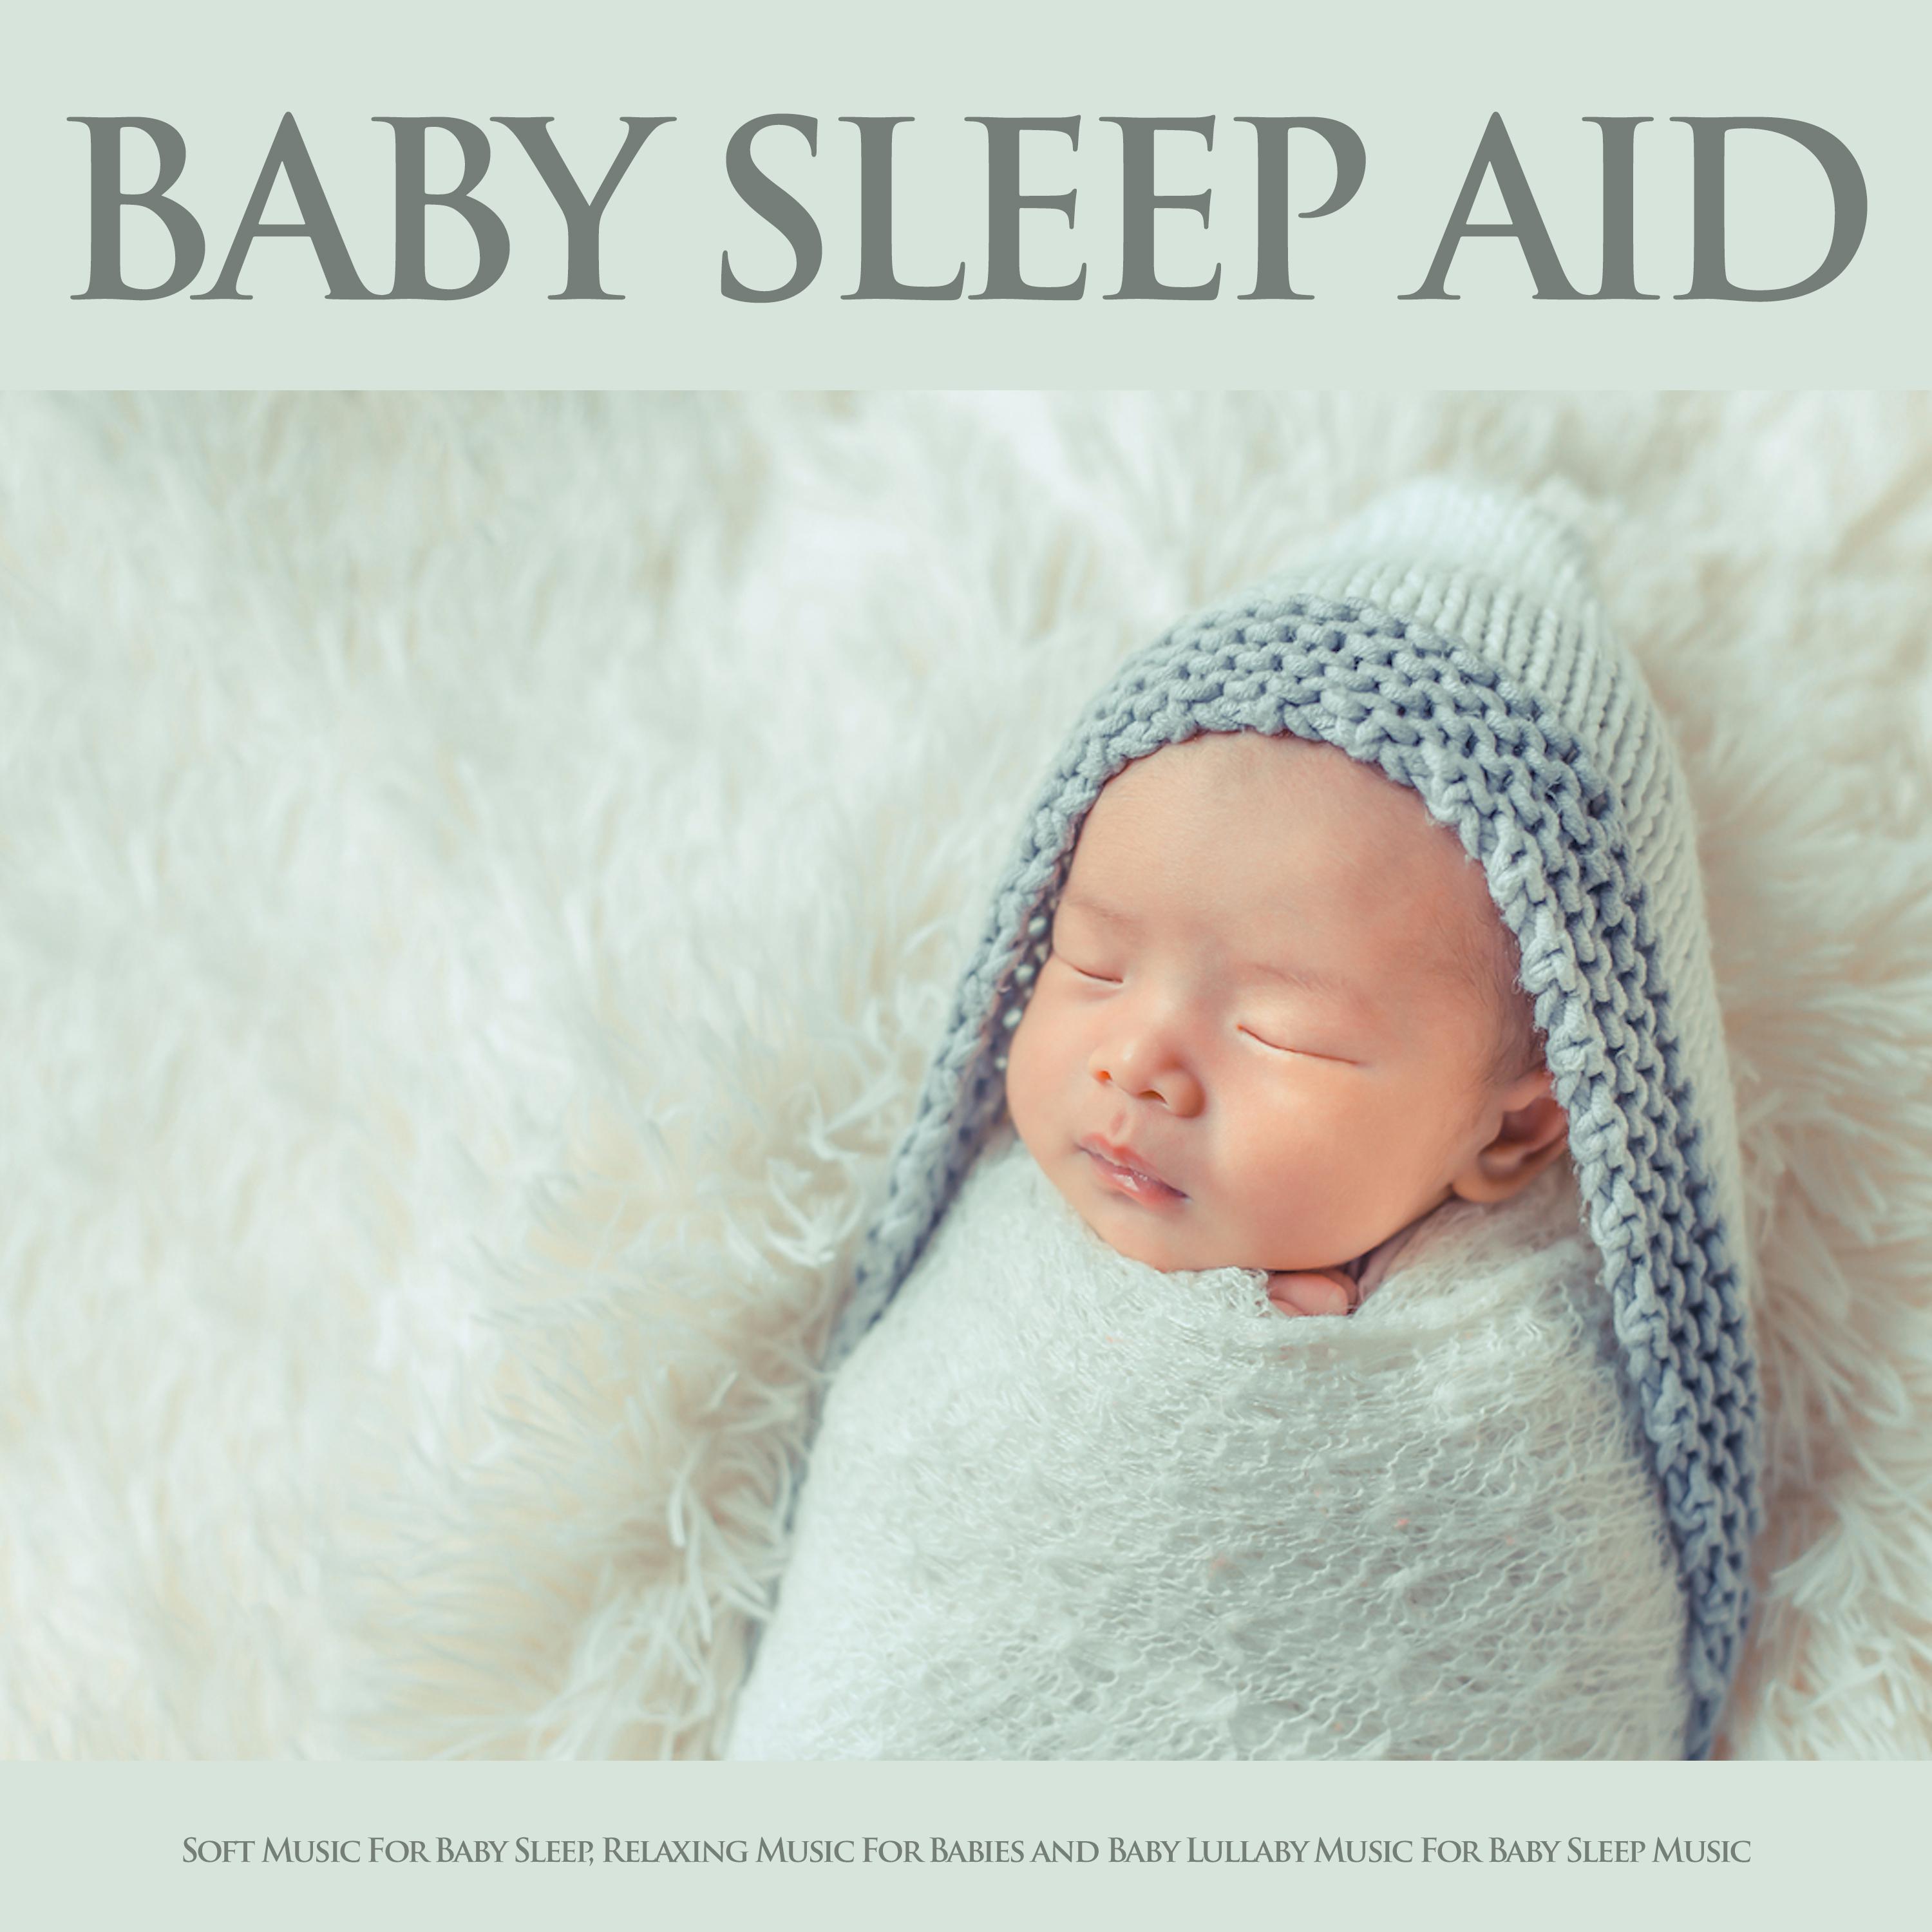 Baby Sleep Aid: Soft Music For Baby Sleep, Relaxing Music For Babies and Baby Lullaby Music For Baby Sleep Music